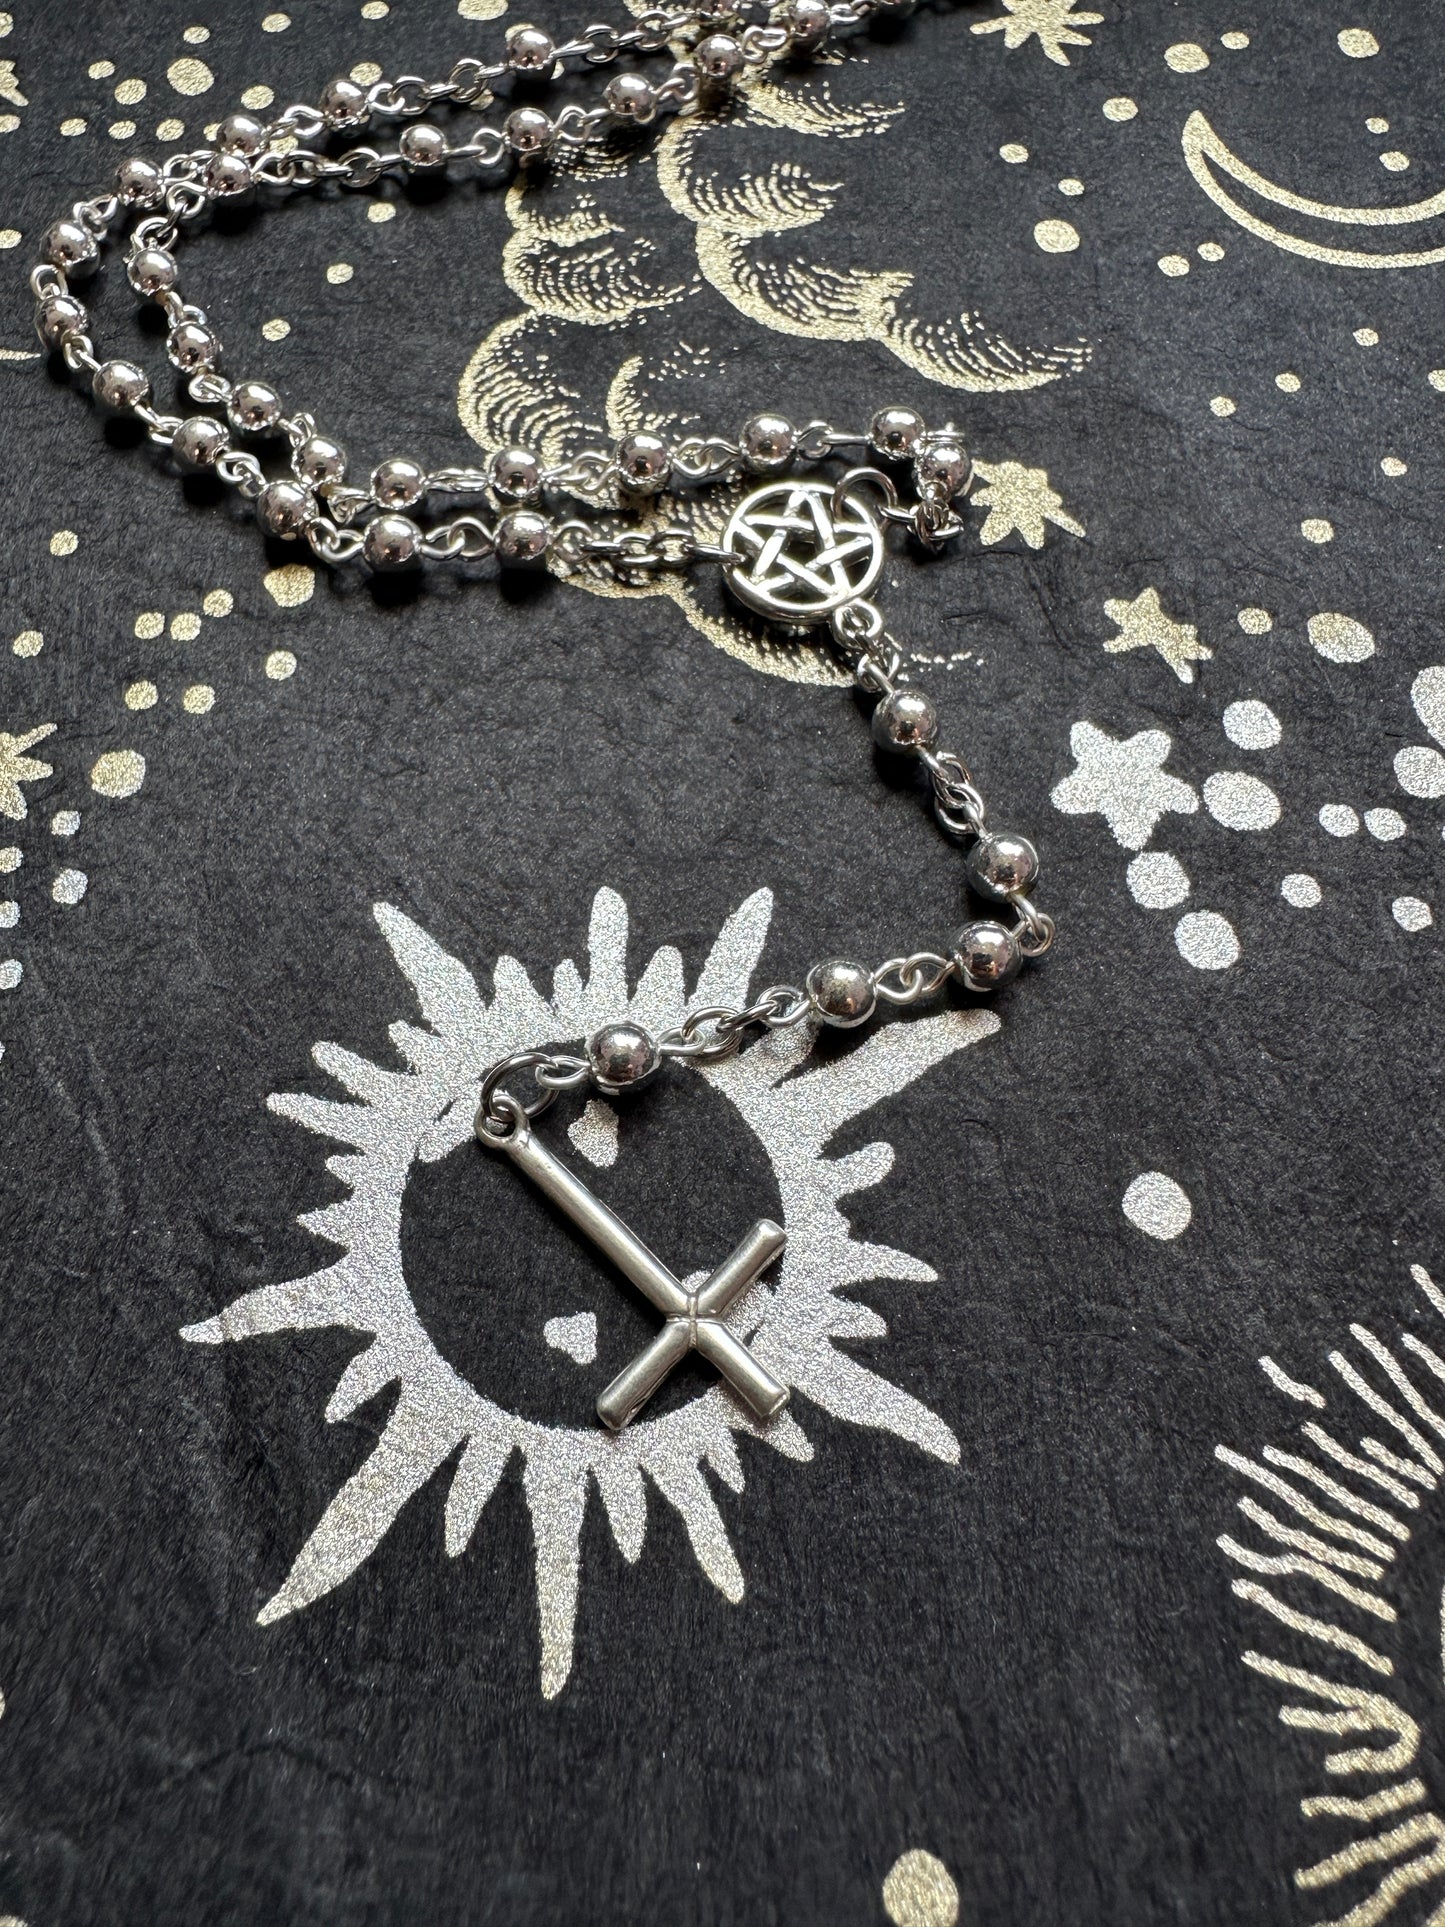 Small silver hematite rosary